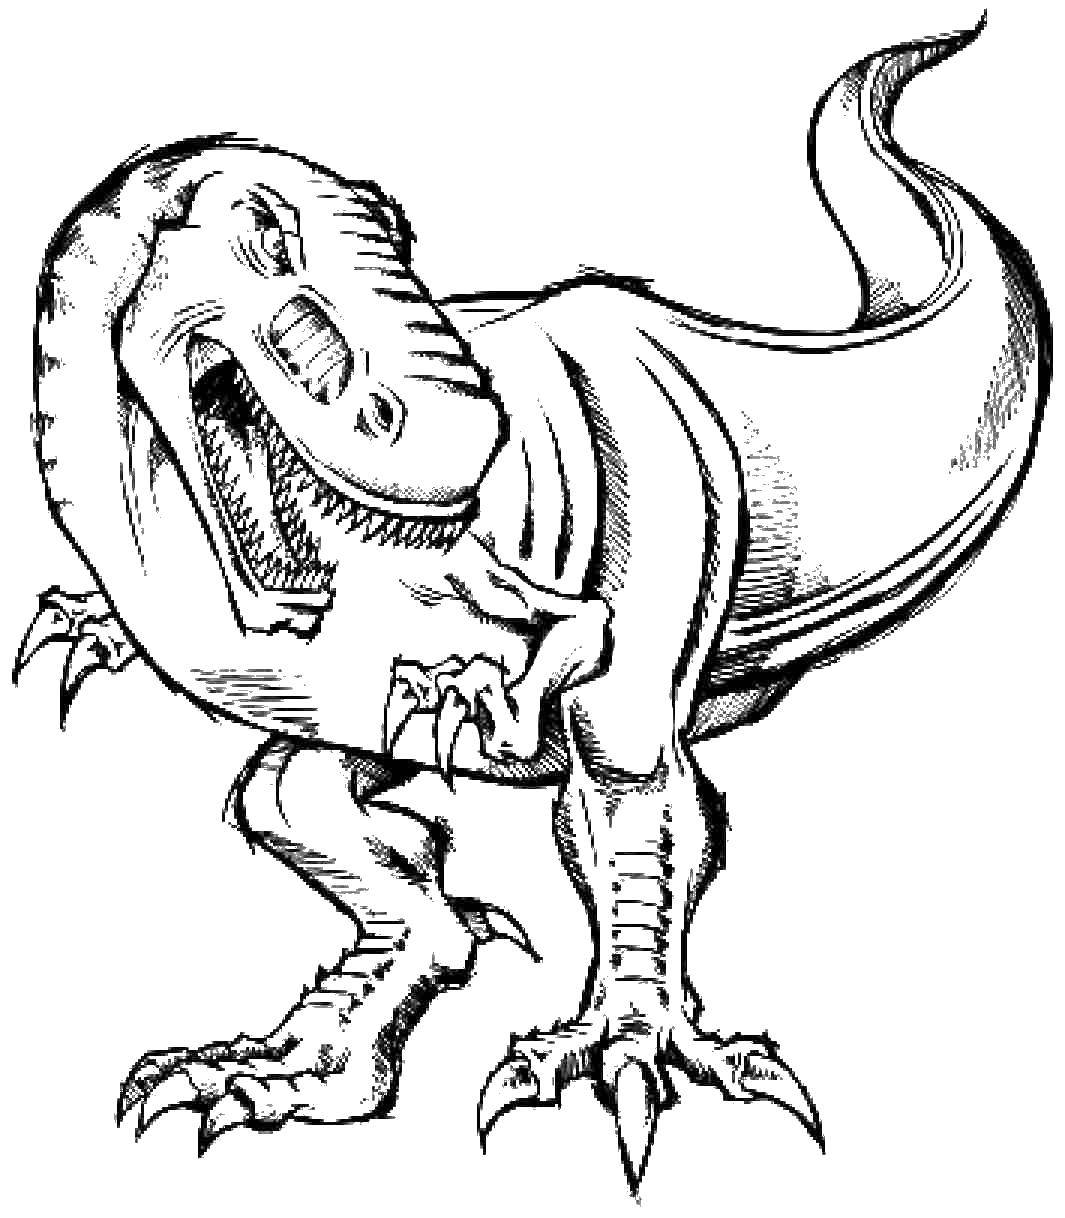 Название: Раскраска Тираннозавр рекс. Категория: динозавр. Теги: Тираннозавр, Рекс.